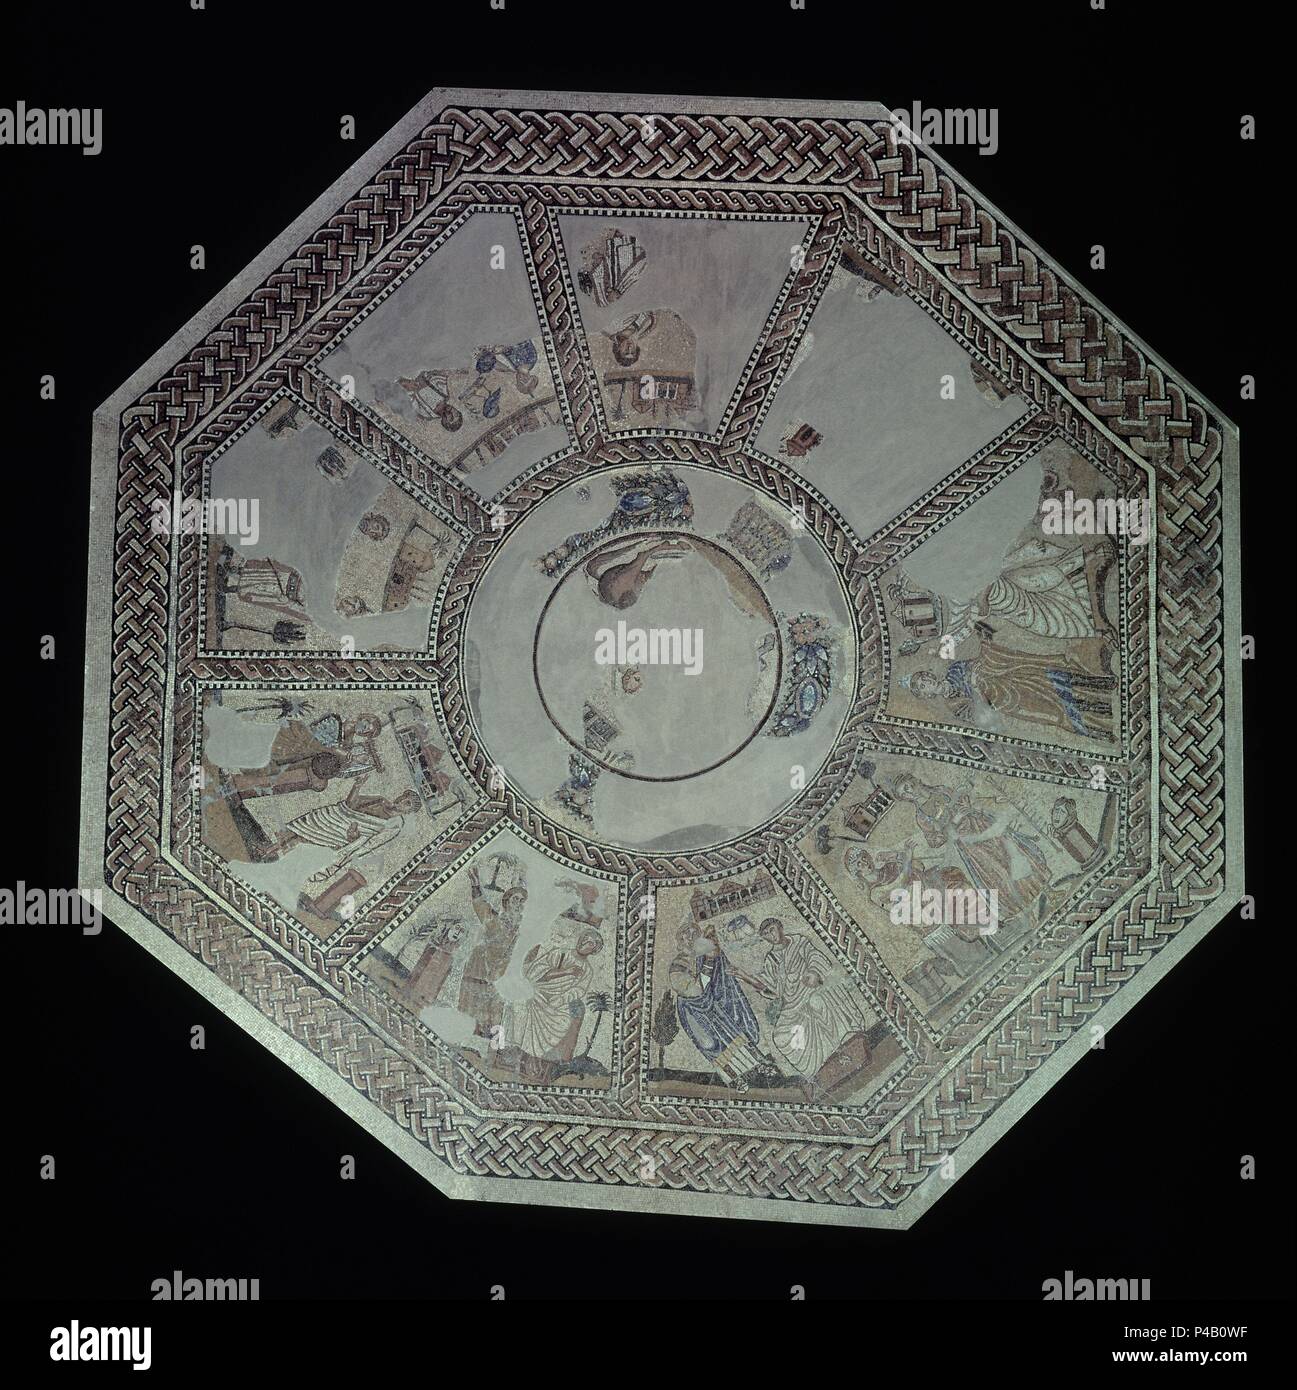 MOSAICO ROMANO - S III. Location: ARCHAEOLOGICAL MUSEUM, ANTIOQUIA, TURQUIA  Stock Photo - Alamy